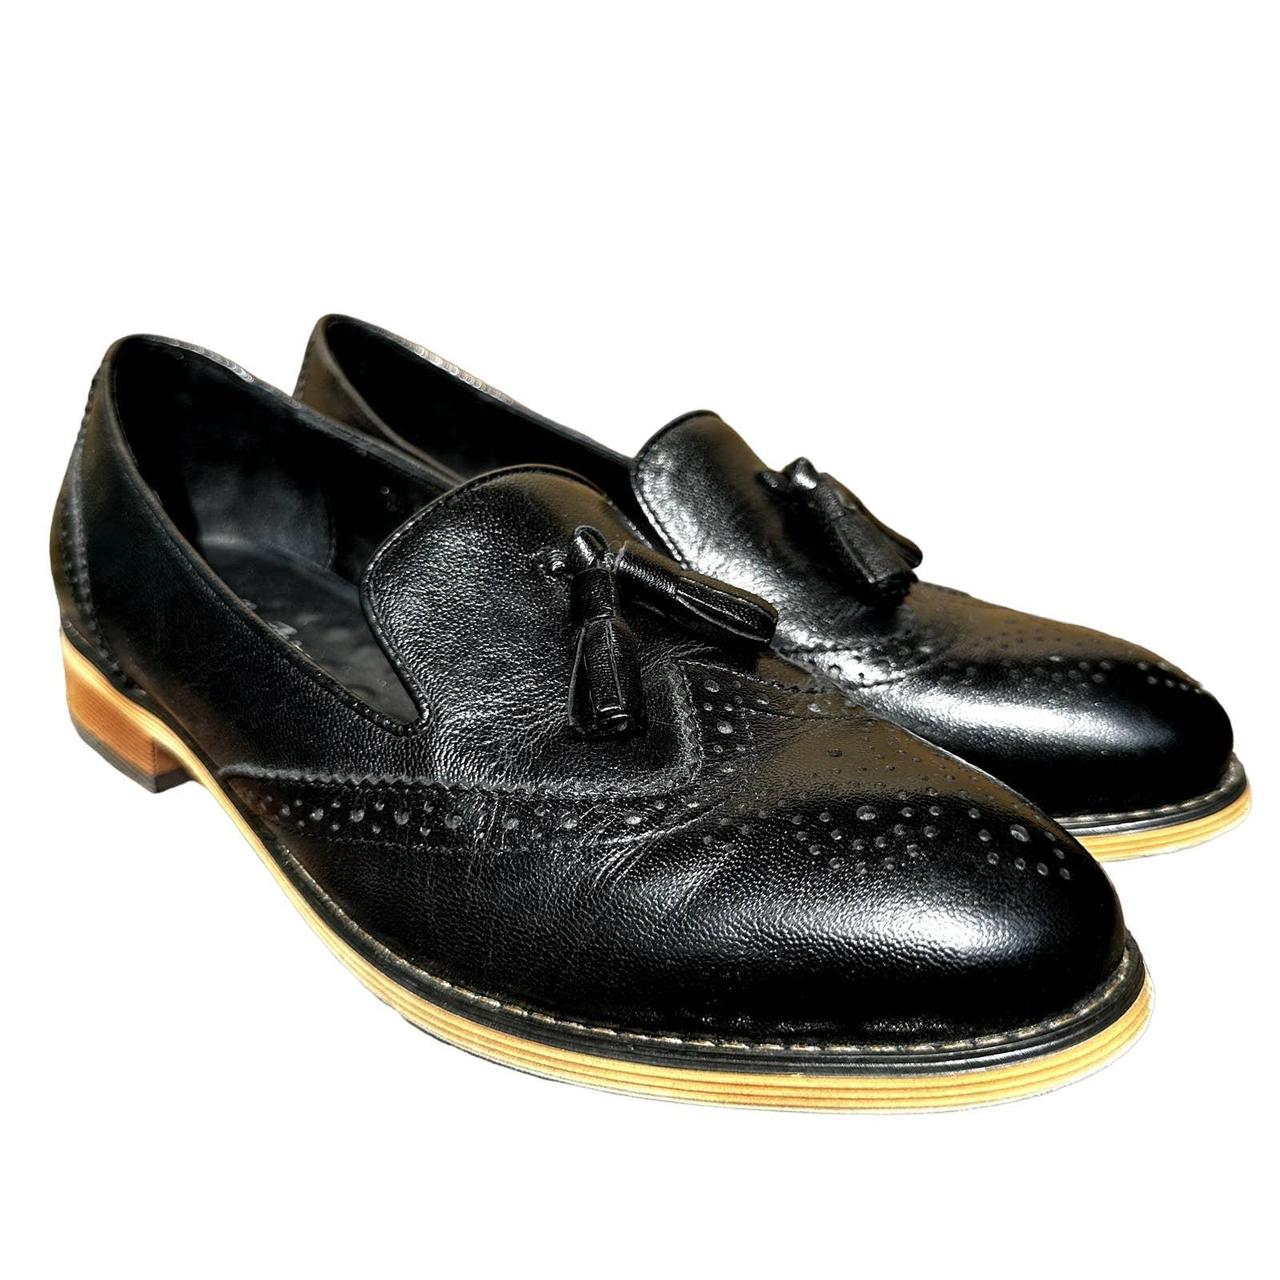 Almond Toe Penny Loafer in Black, Women's Shoes